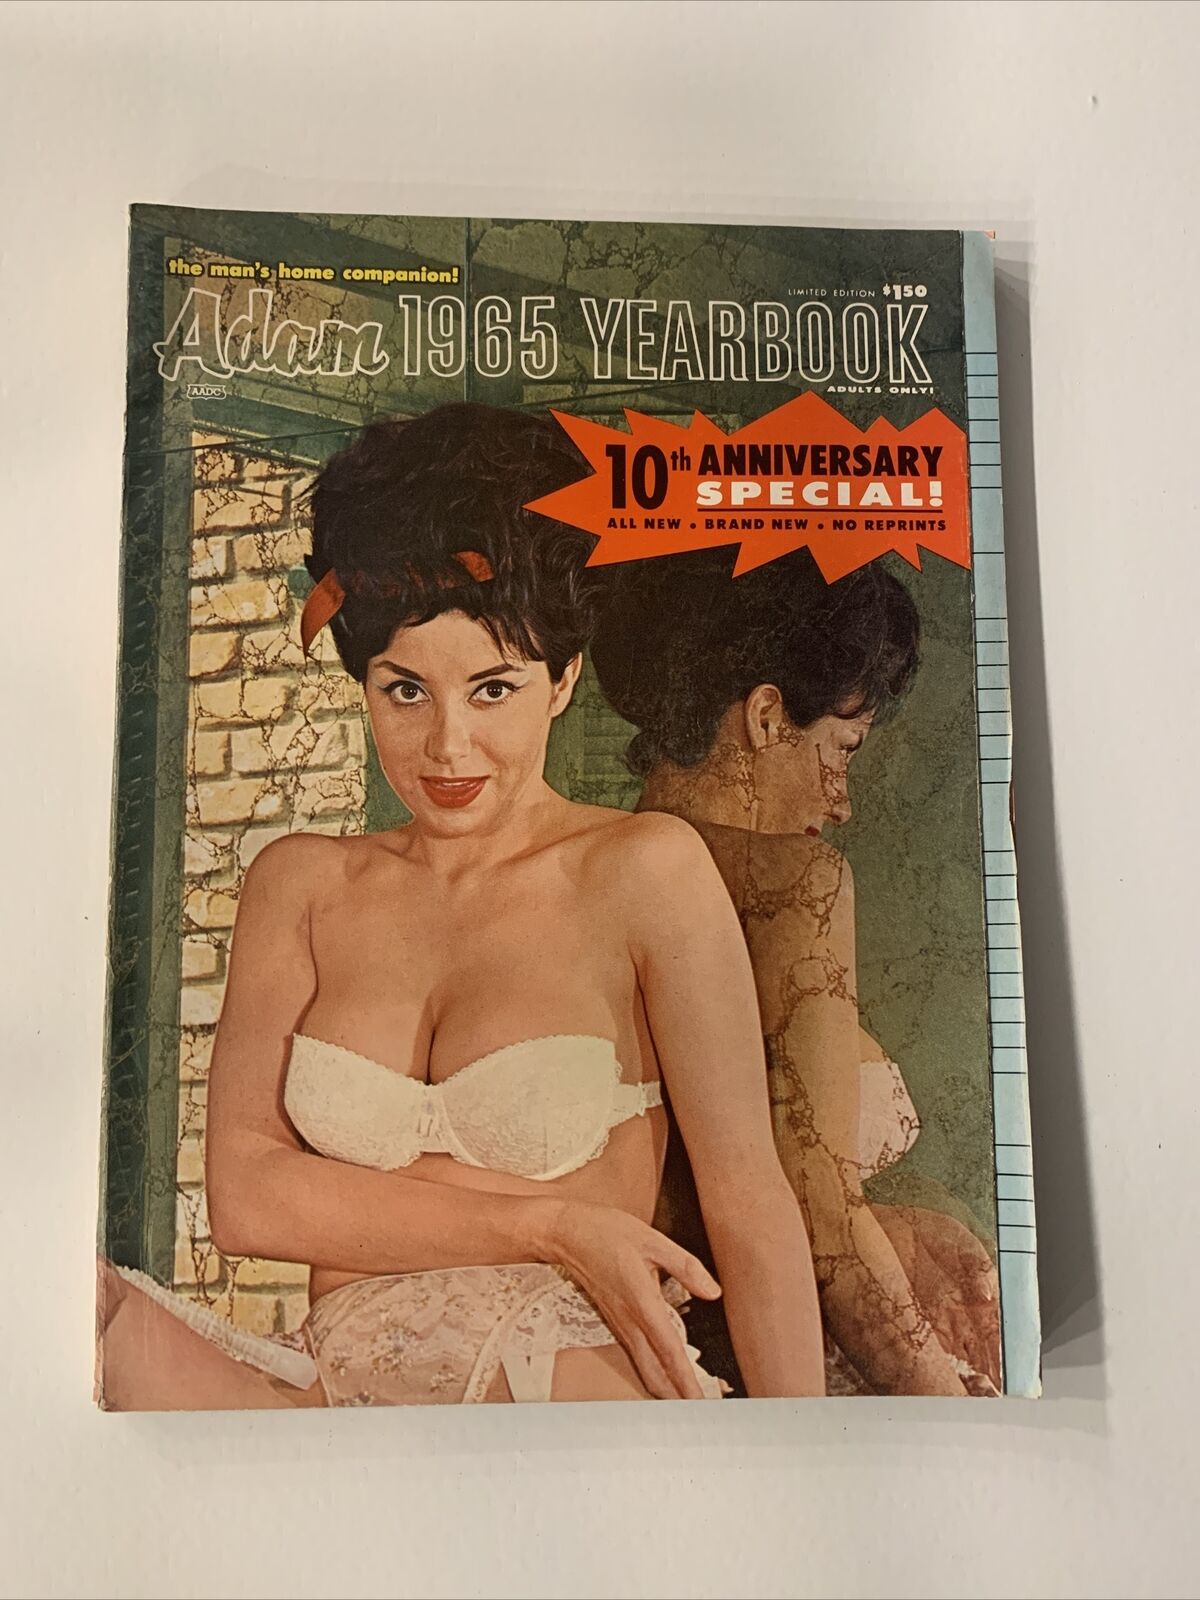 Adam 1965 Yearbook 10th Anniversary Vintage RARE Magazine - Man’s Home Companion